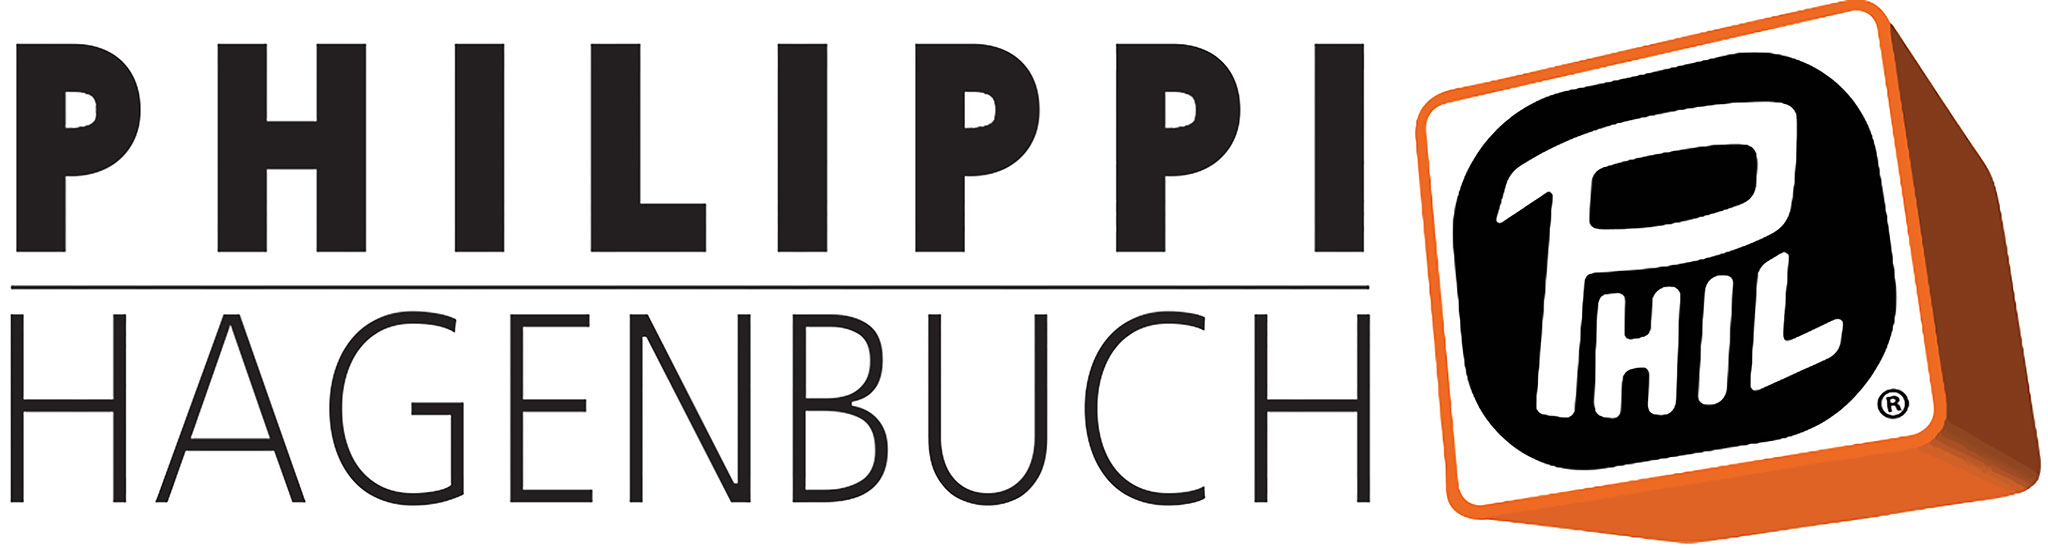 Philippi-Hagenbuch, Inc.